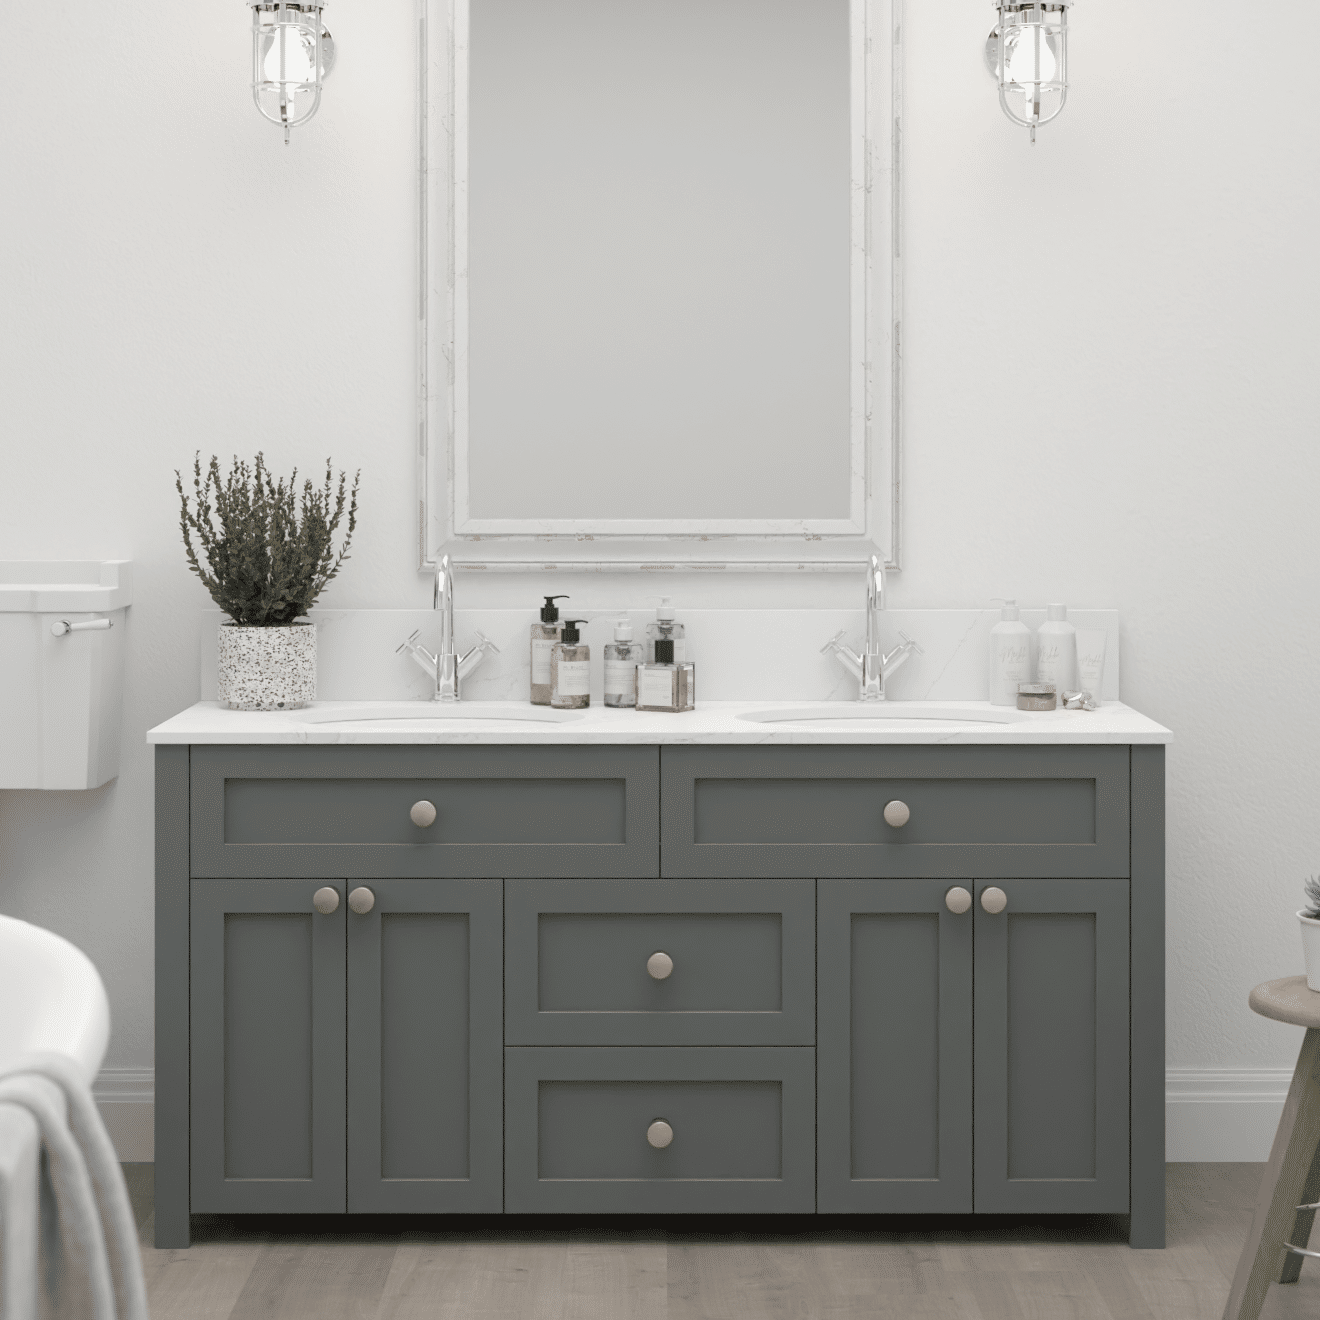 Large double shaker style vanity unit with undermounted sinks